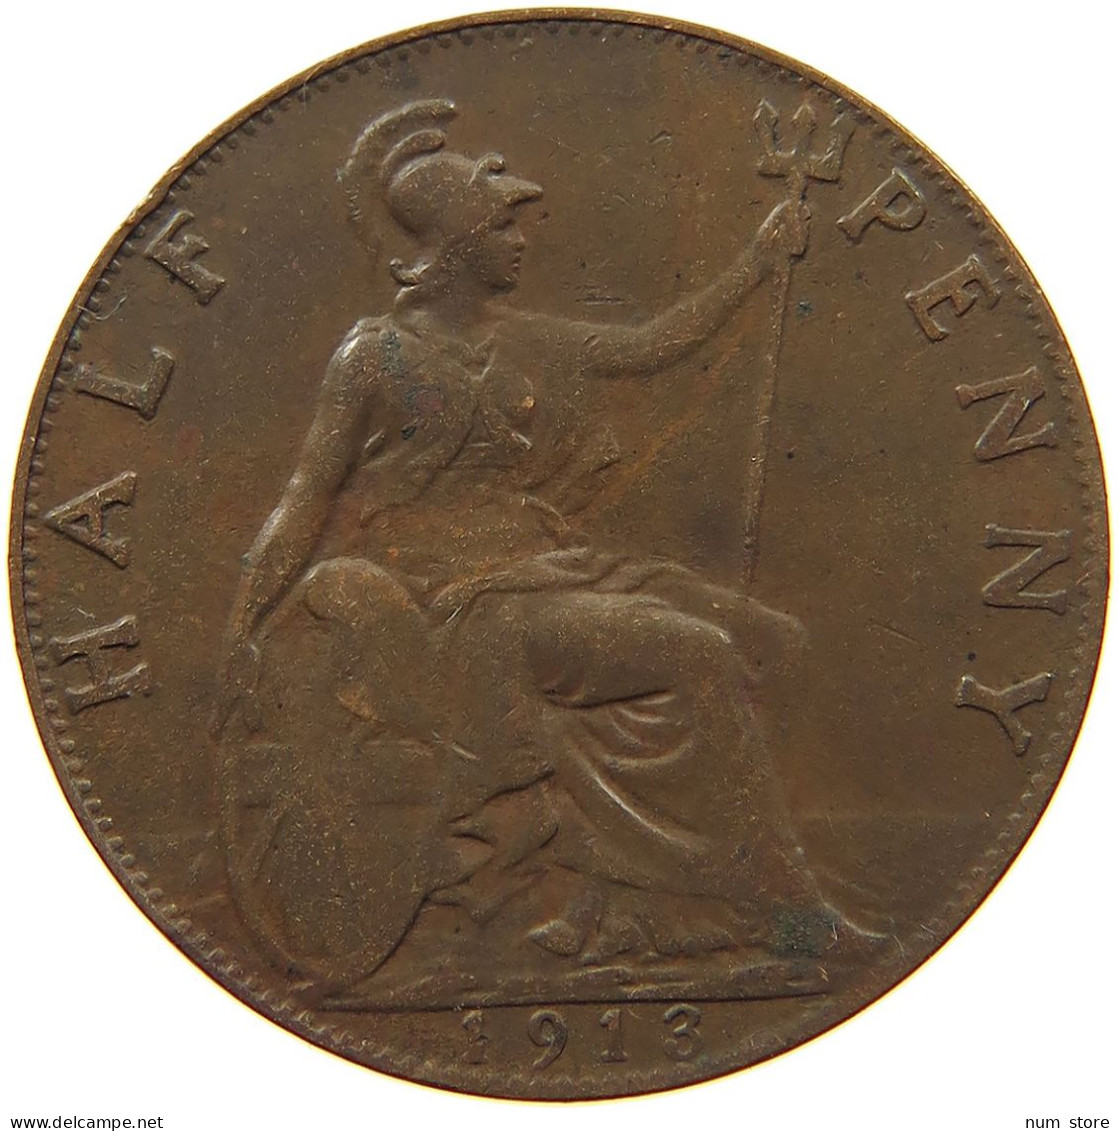 GREAT BRITAIN HALFPENNY 1913 #s086 0169 - C. 1/2 Penny